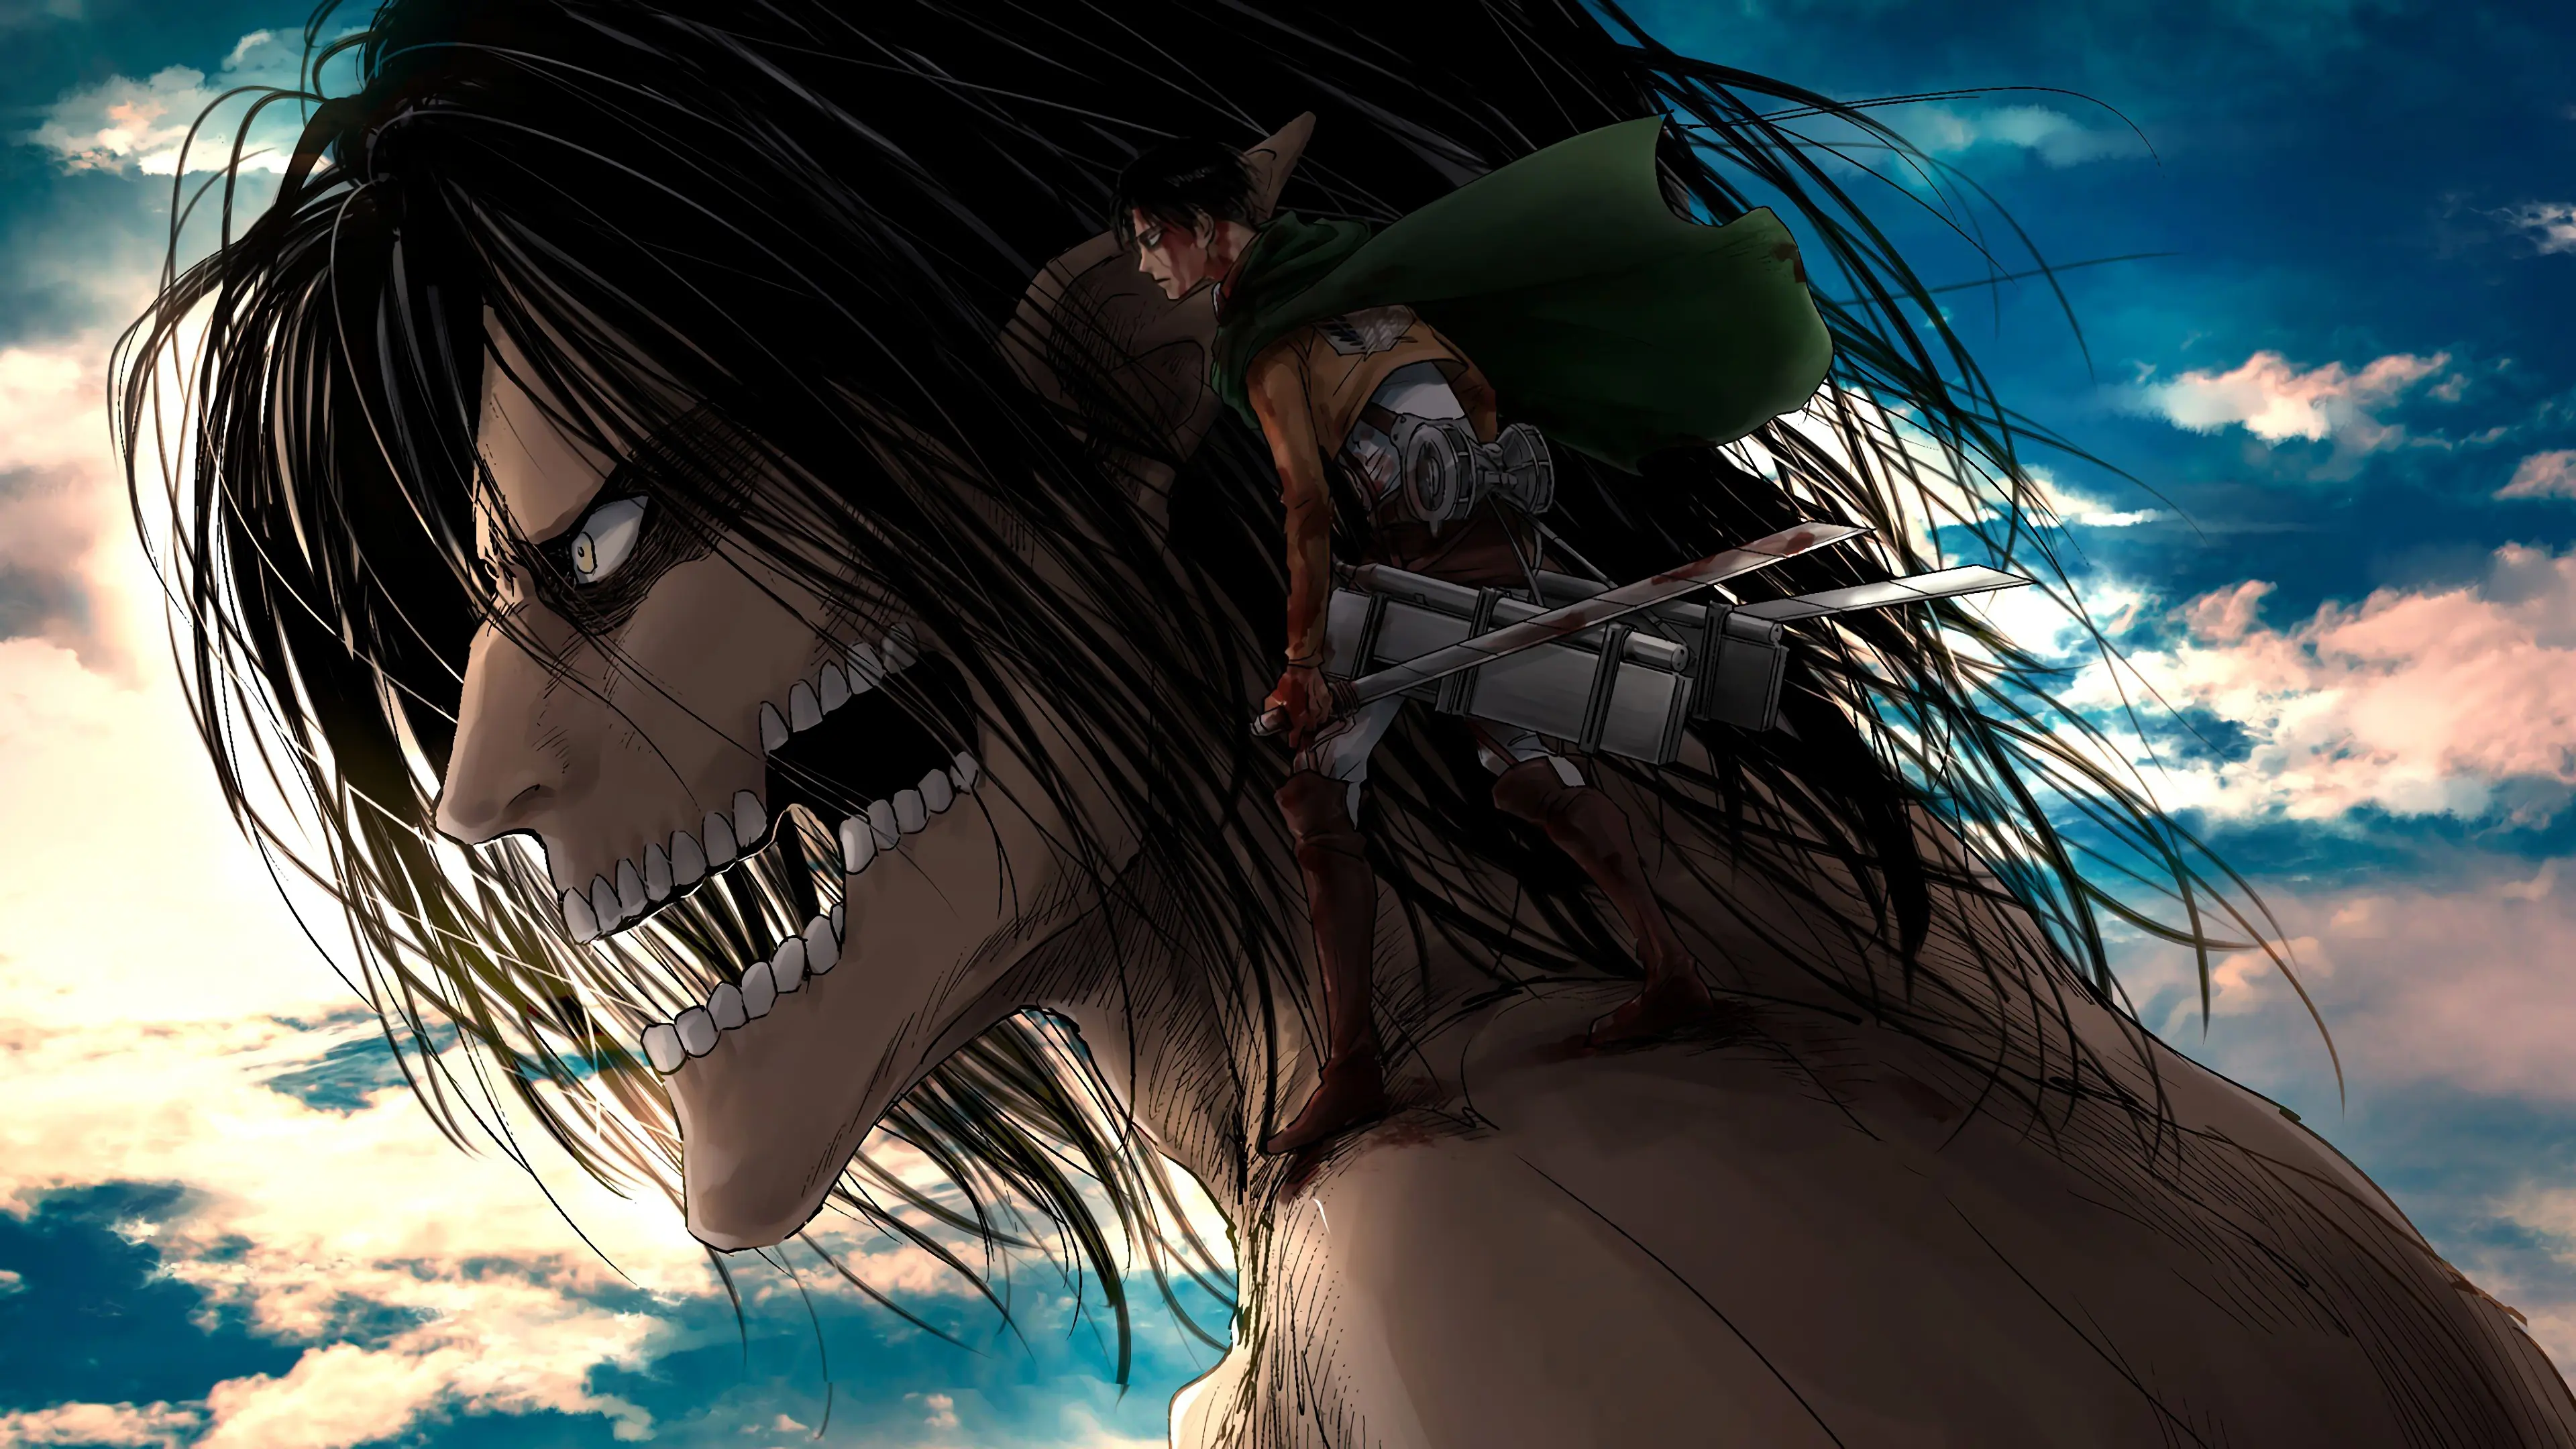 Anime Attack on Titan Season 3 background 19 | Background Image